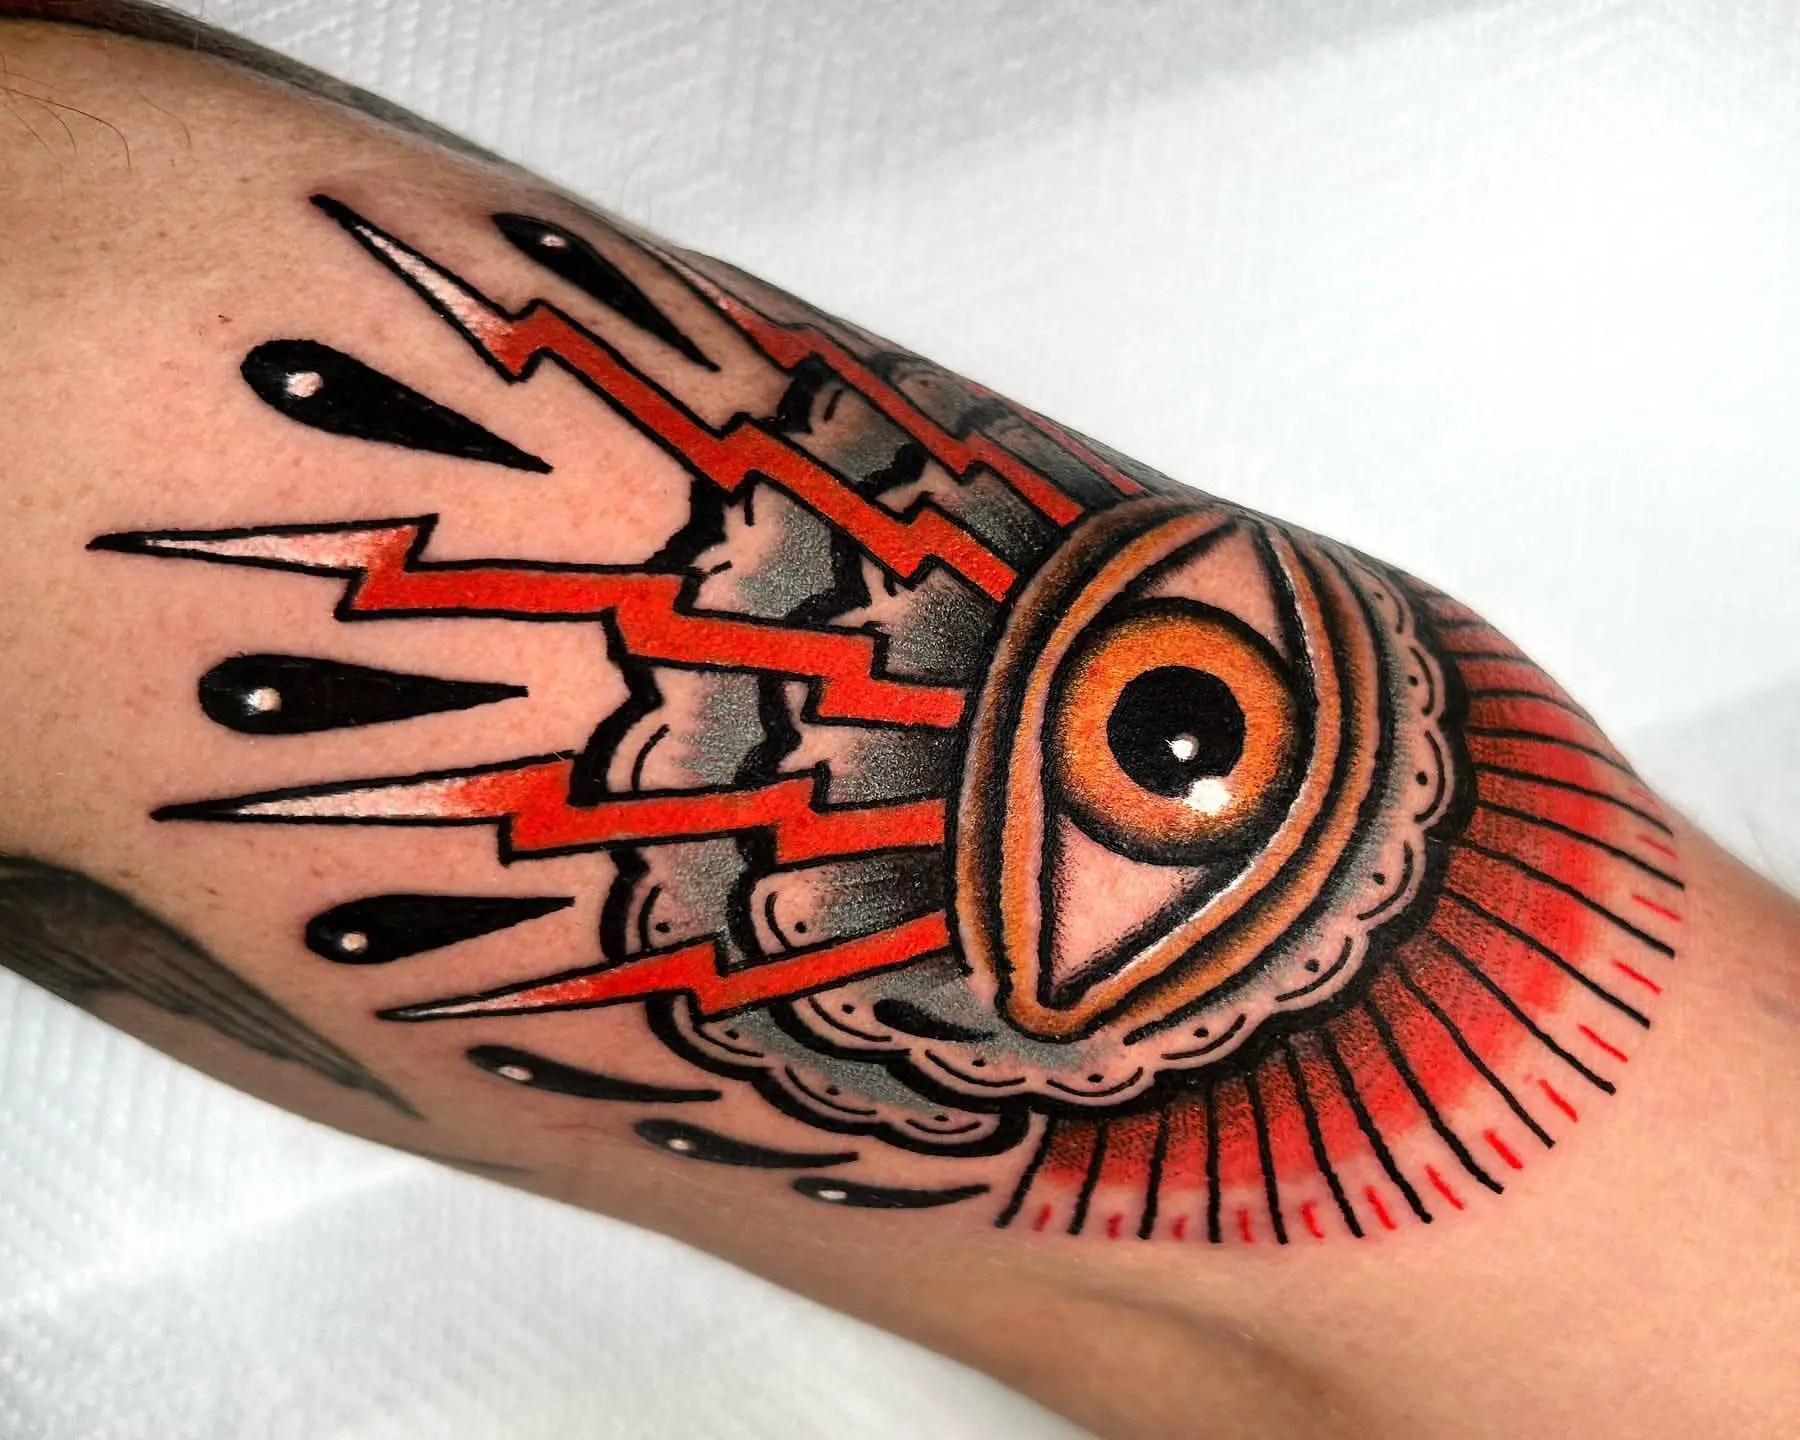 Traditional elbow tattoo ideas